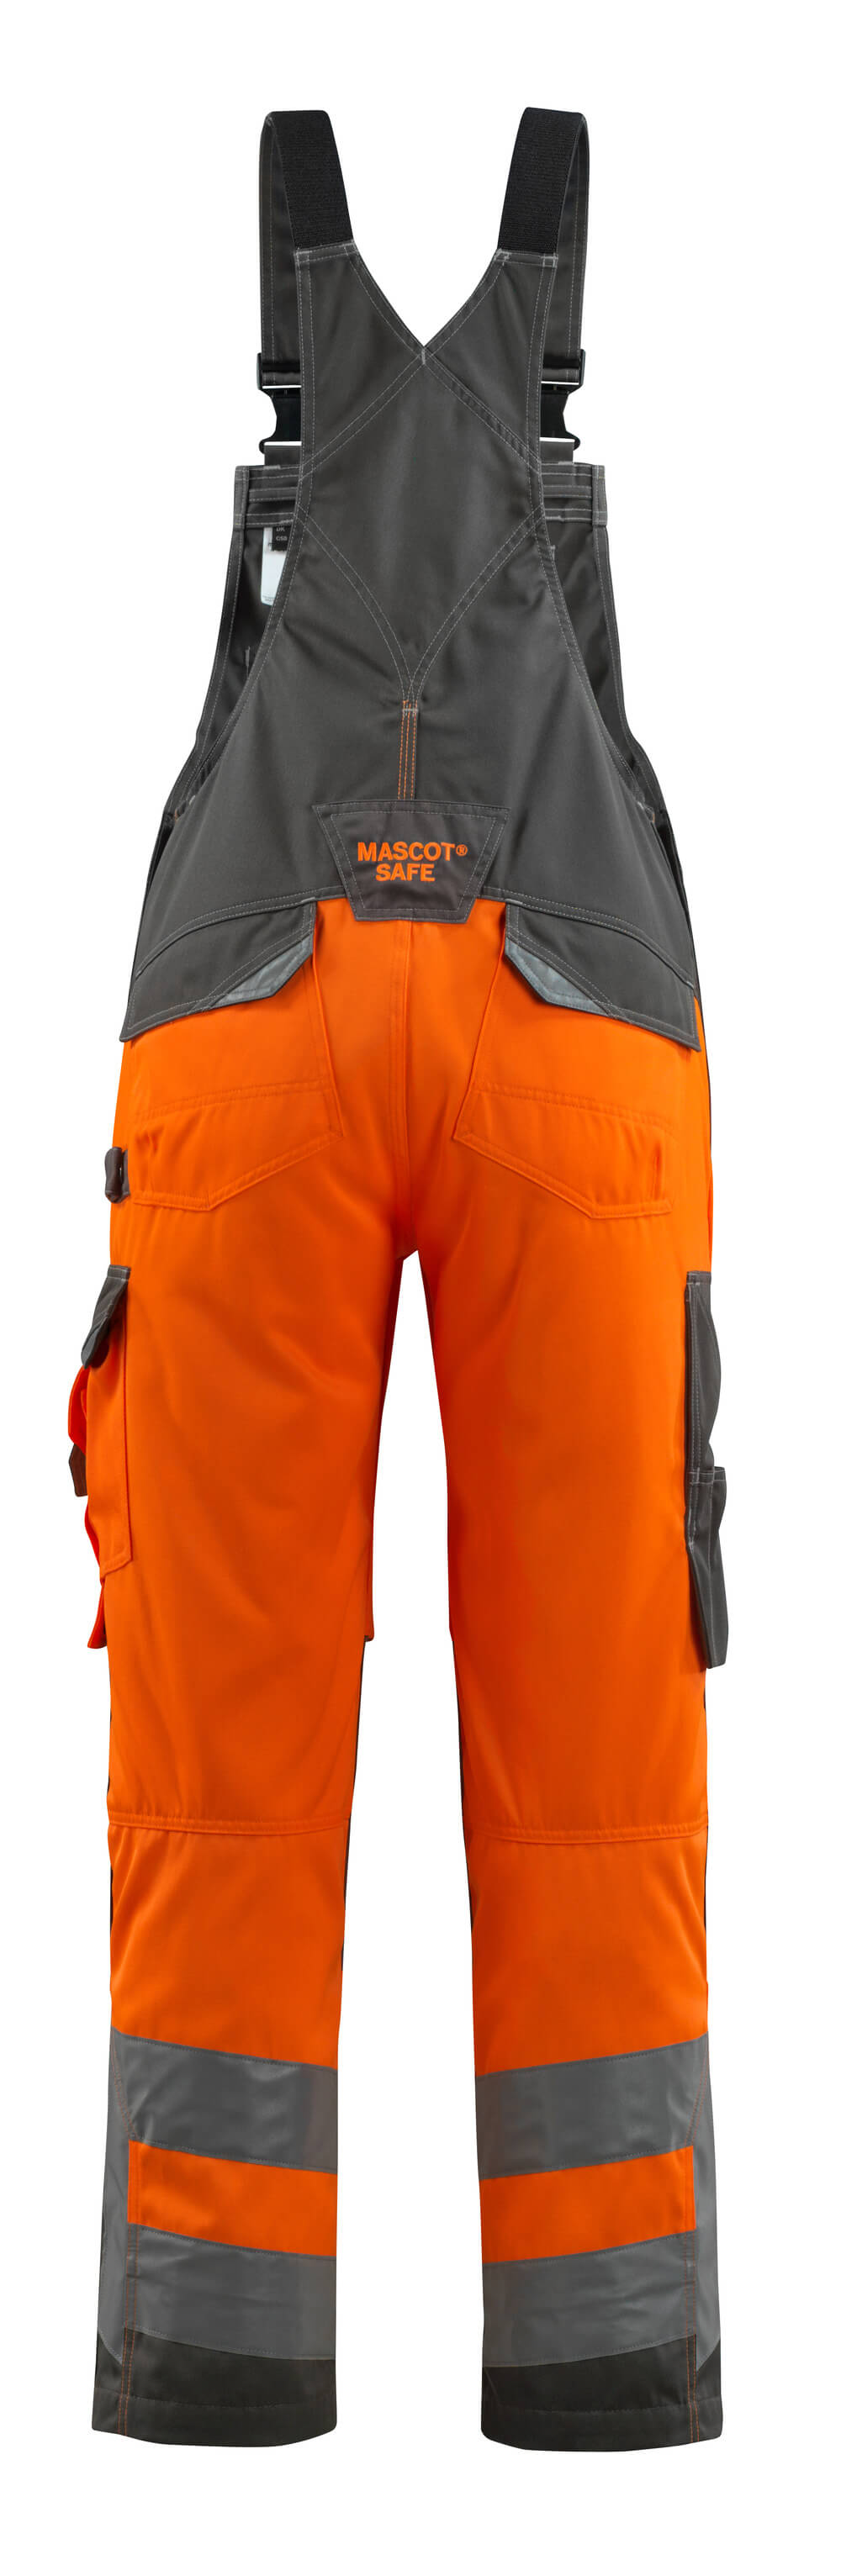 Mascot SAFE SUPREME  Newcastle Bib & Brace with kneepad pockets 15569 hi-vis orange/dark anthracite